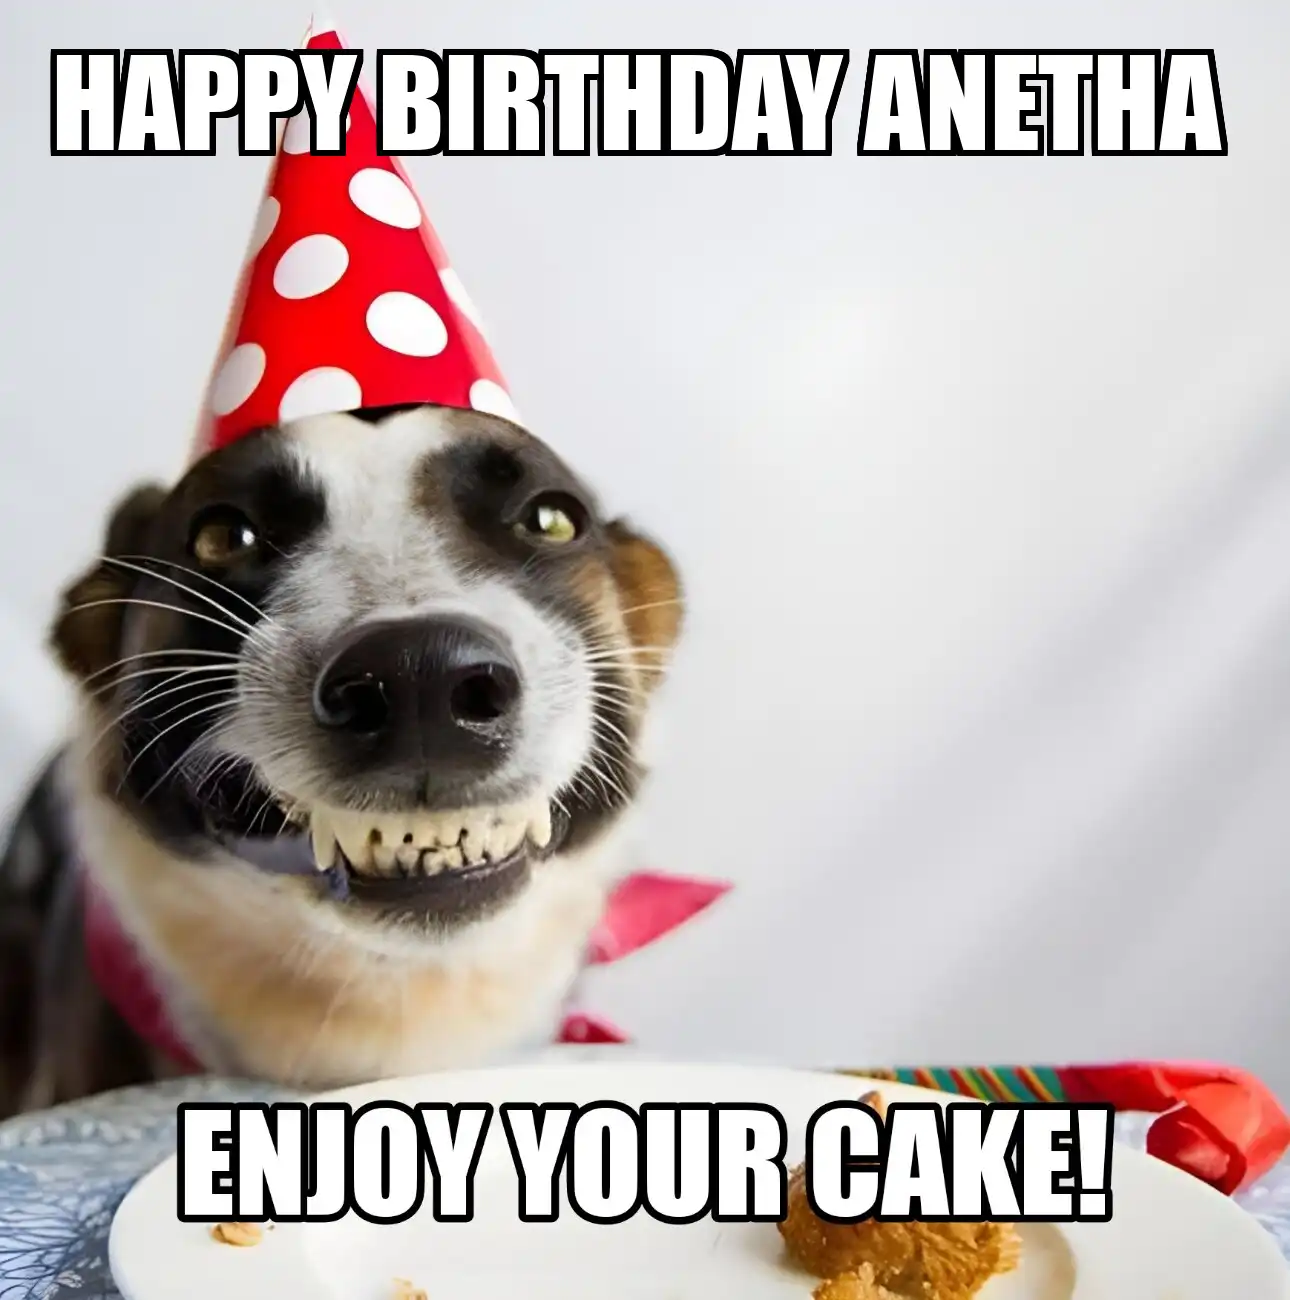 Happy Birthday Anetha Enjoy Your Cake Dog Meme